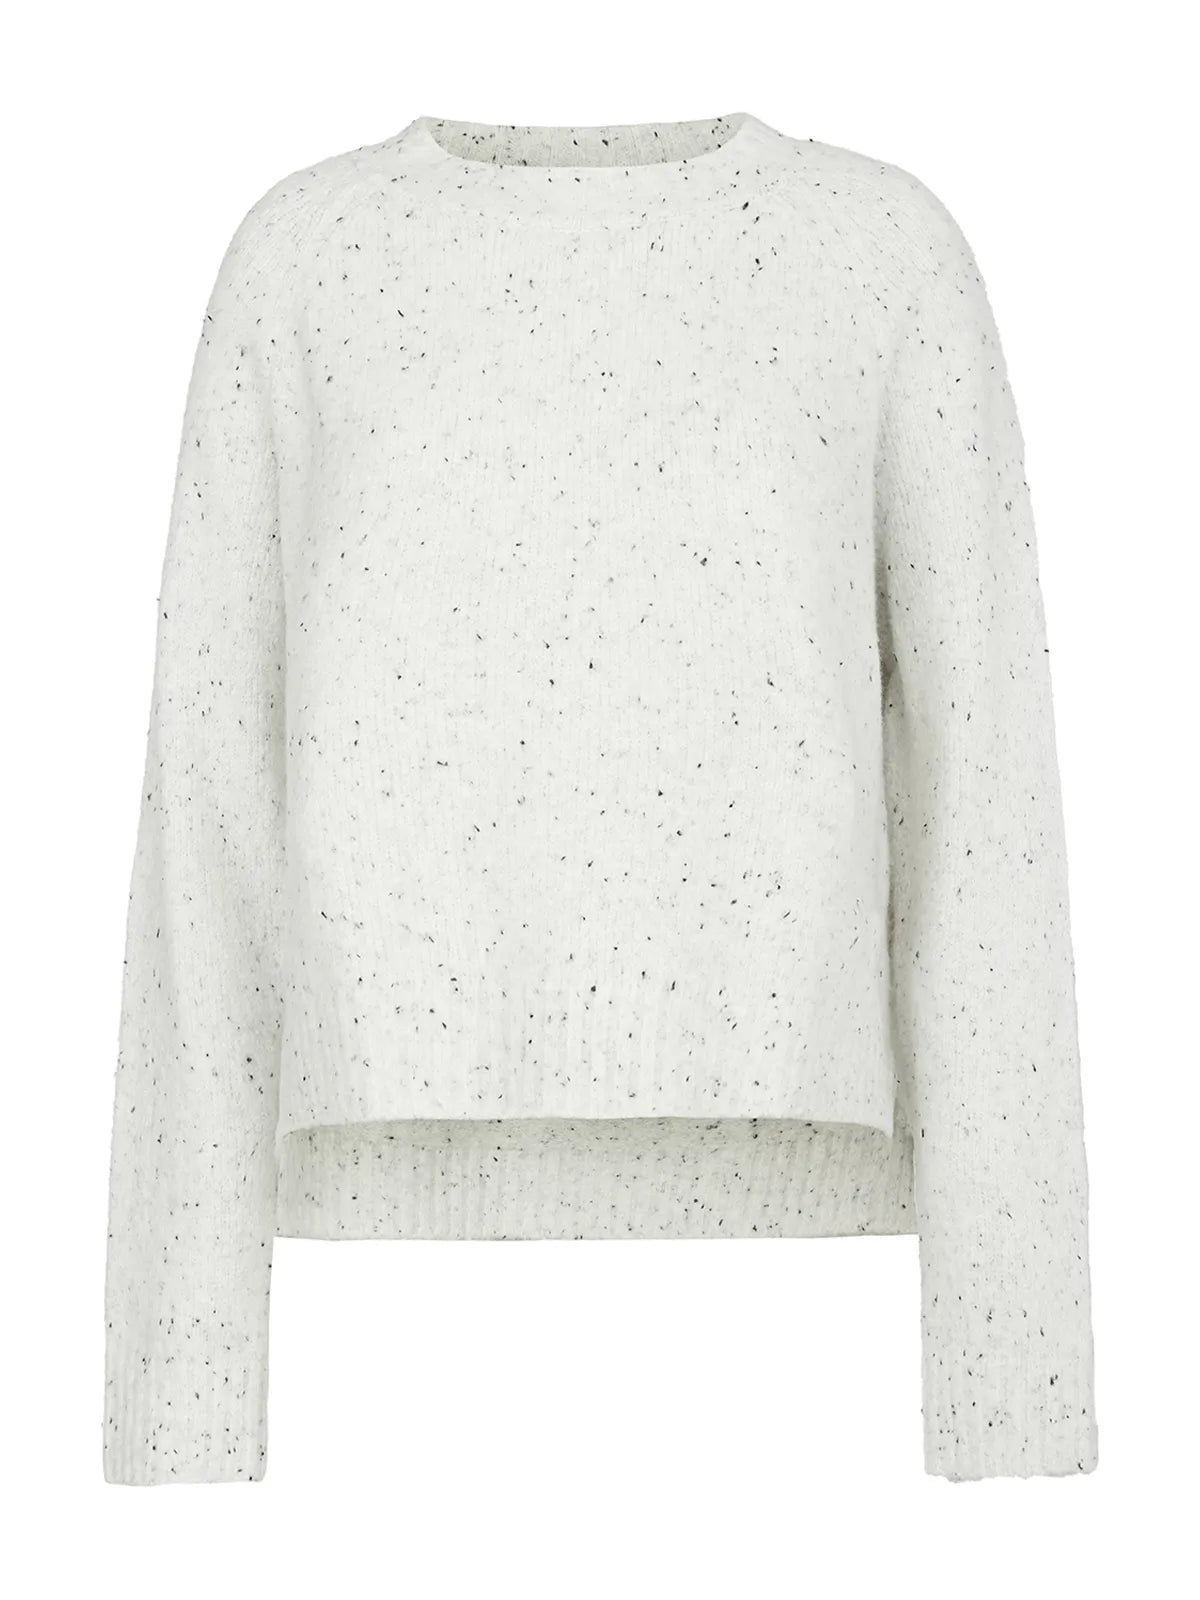 Sleek Silhouette in White: Crewneck Sweater with Polka Dot Embellishments